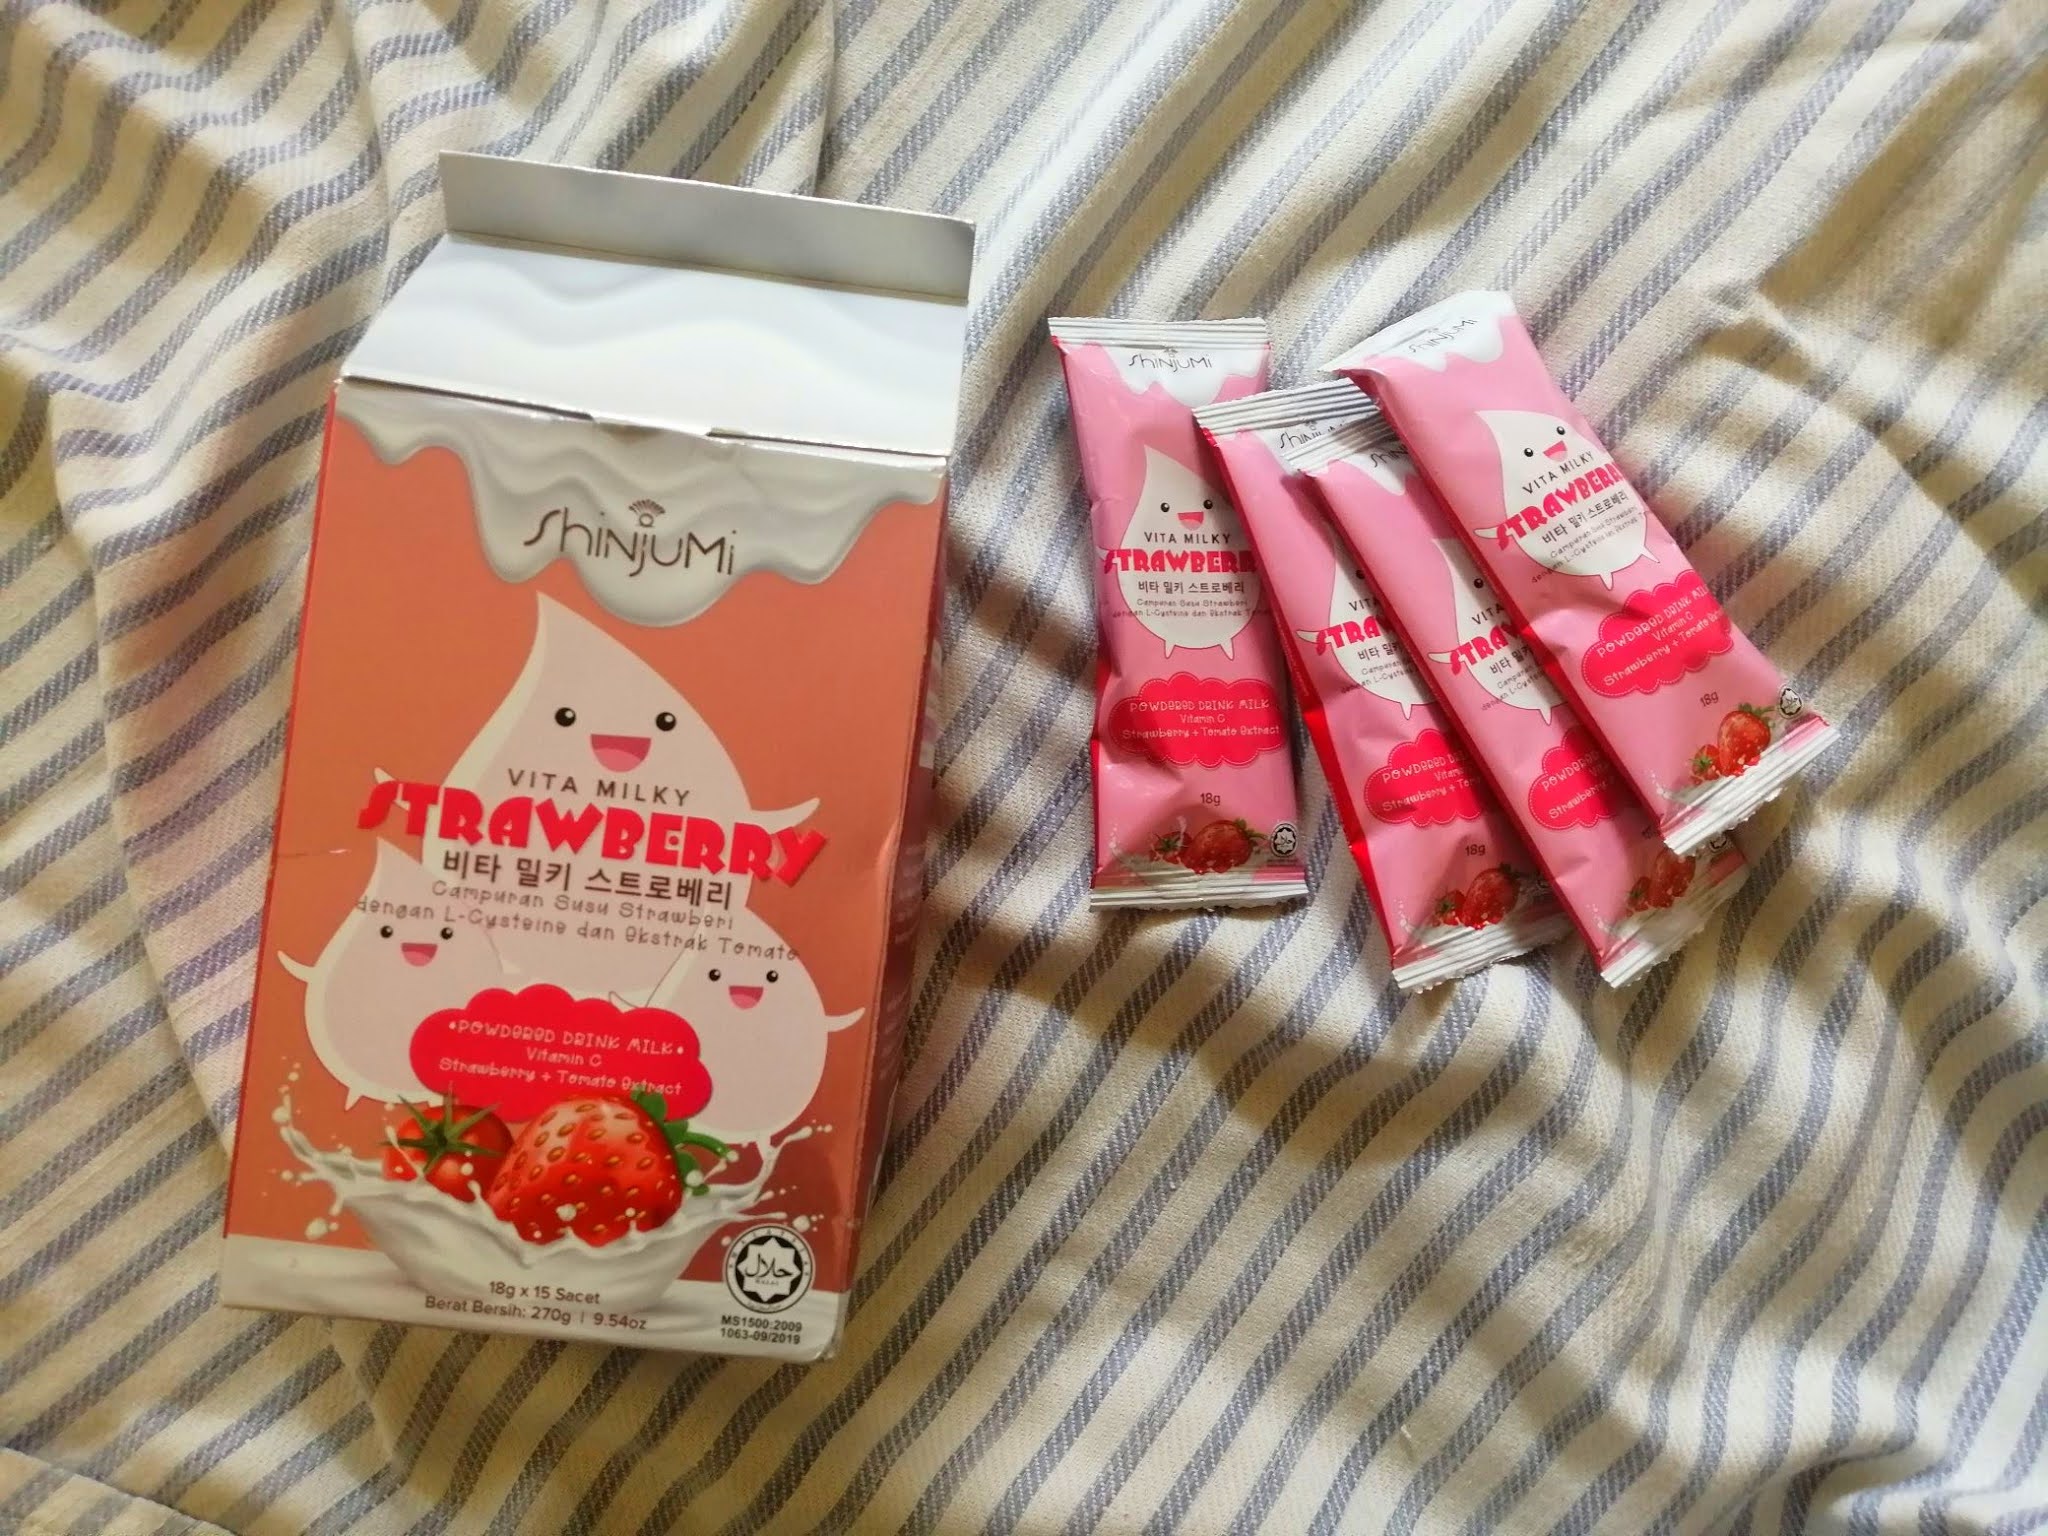 Review Shinjumi Vita Milky Strawberry